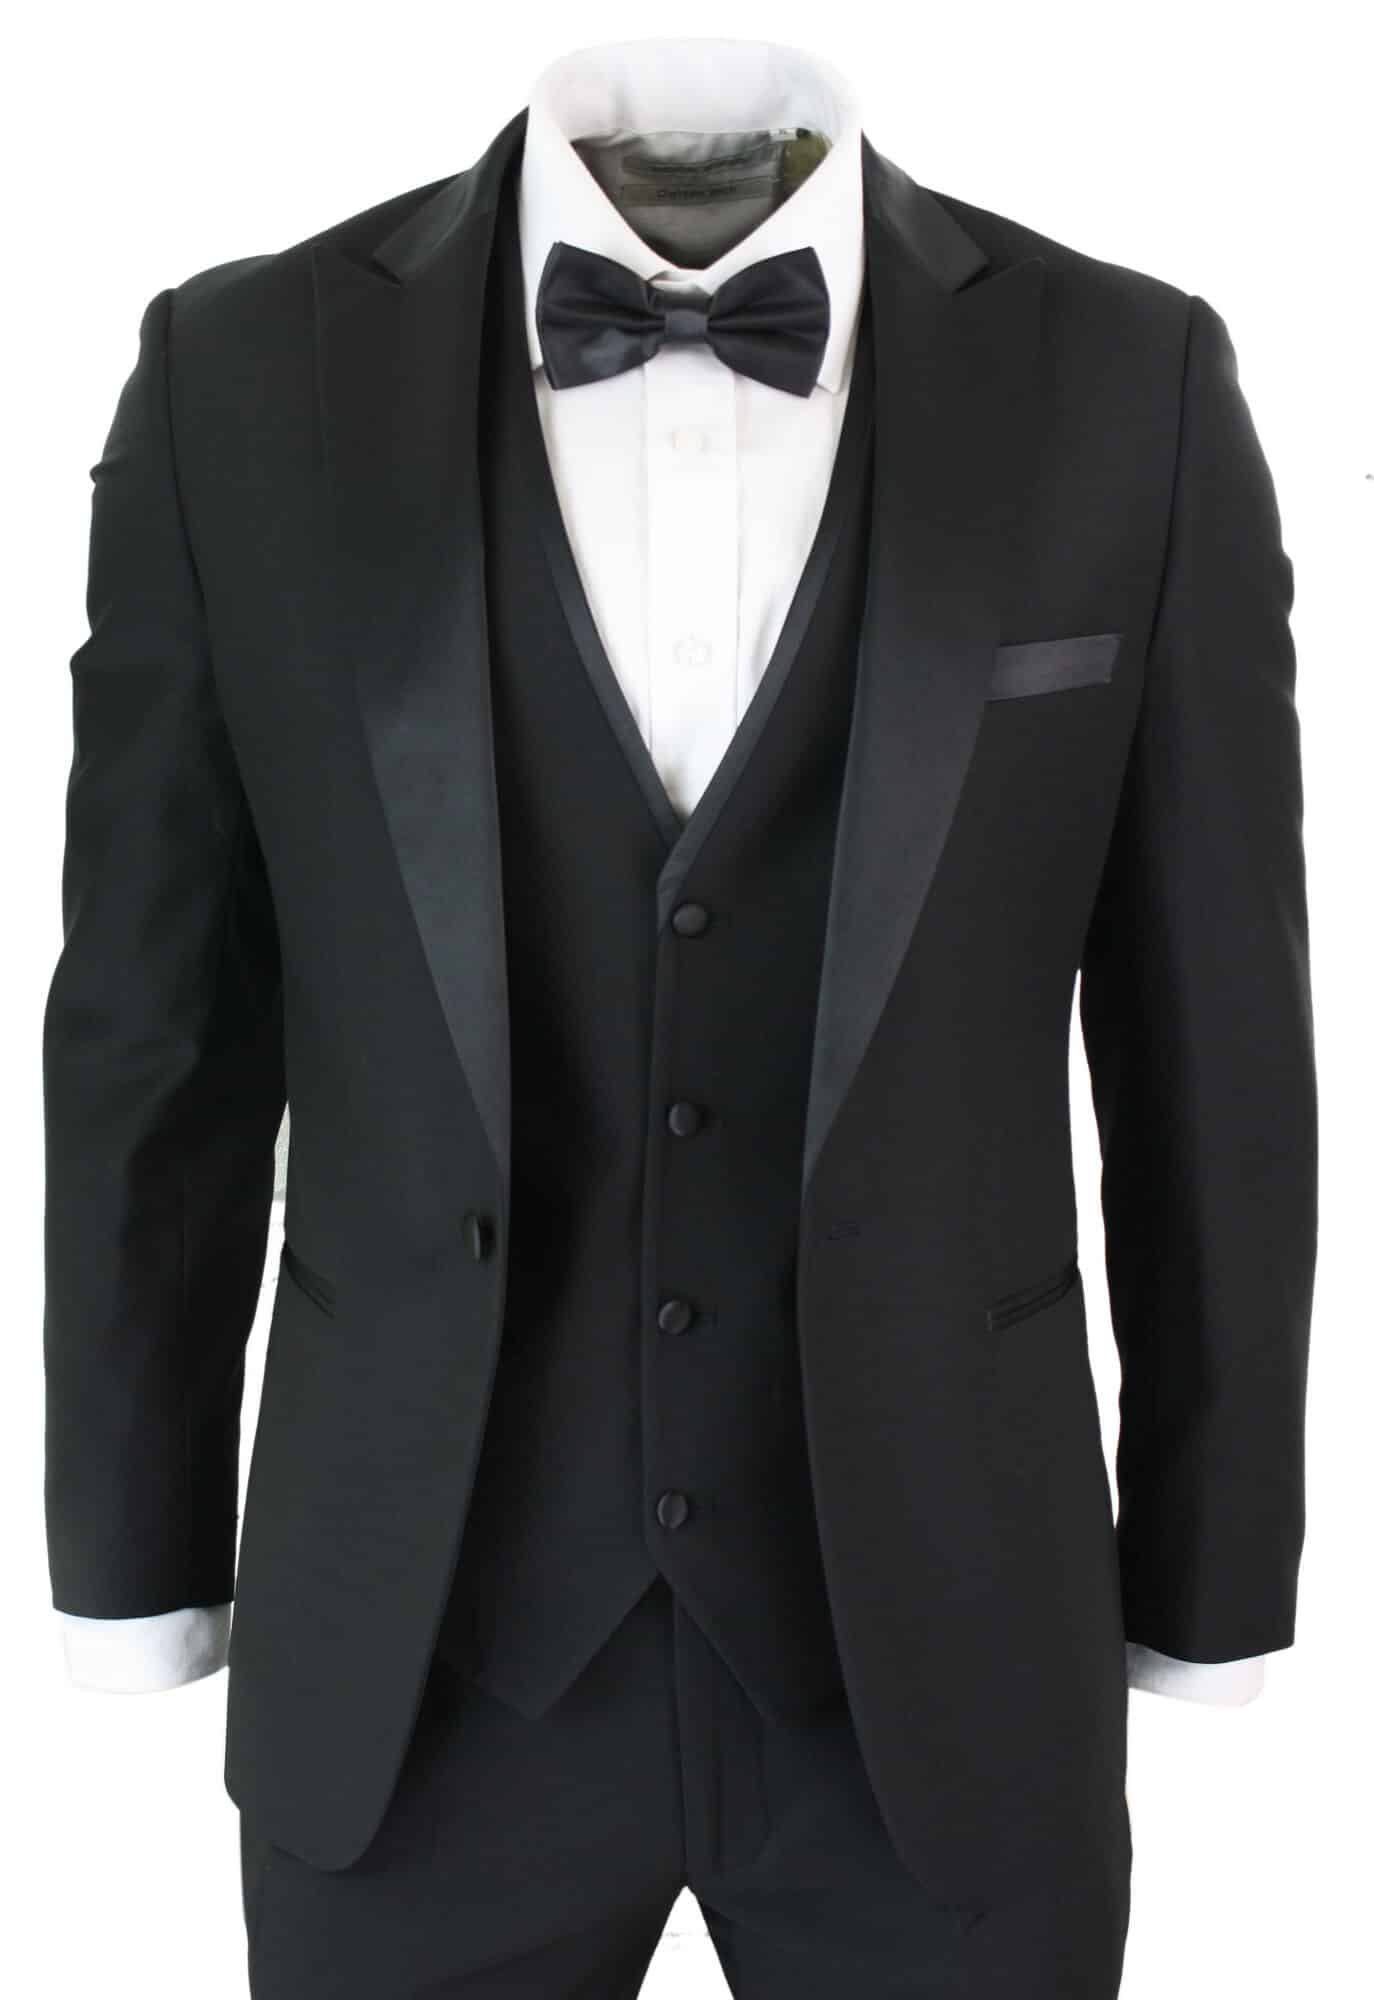 Paul Andrew Regent Black Mens 3 Piece Black Classic Satin Tuxedo Dinner Suit Tailored Fit